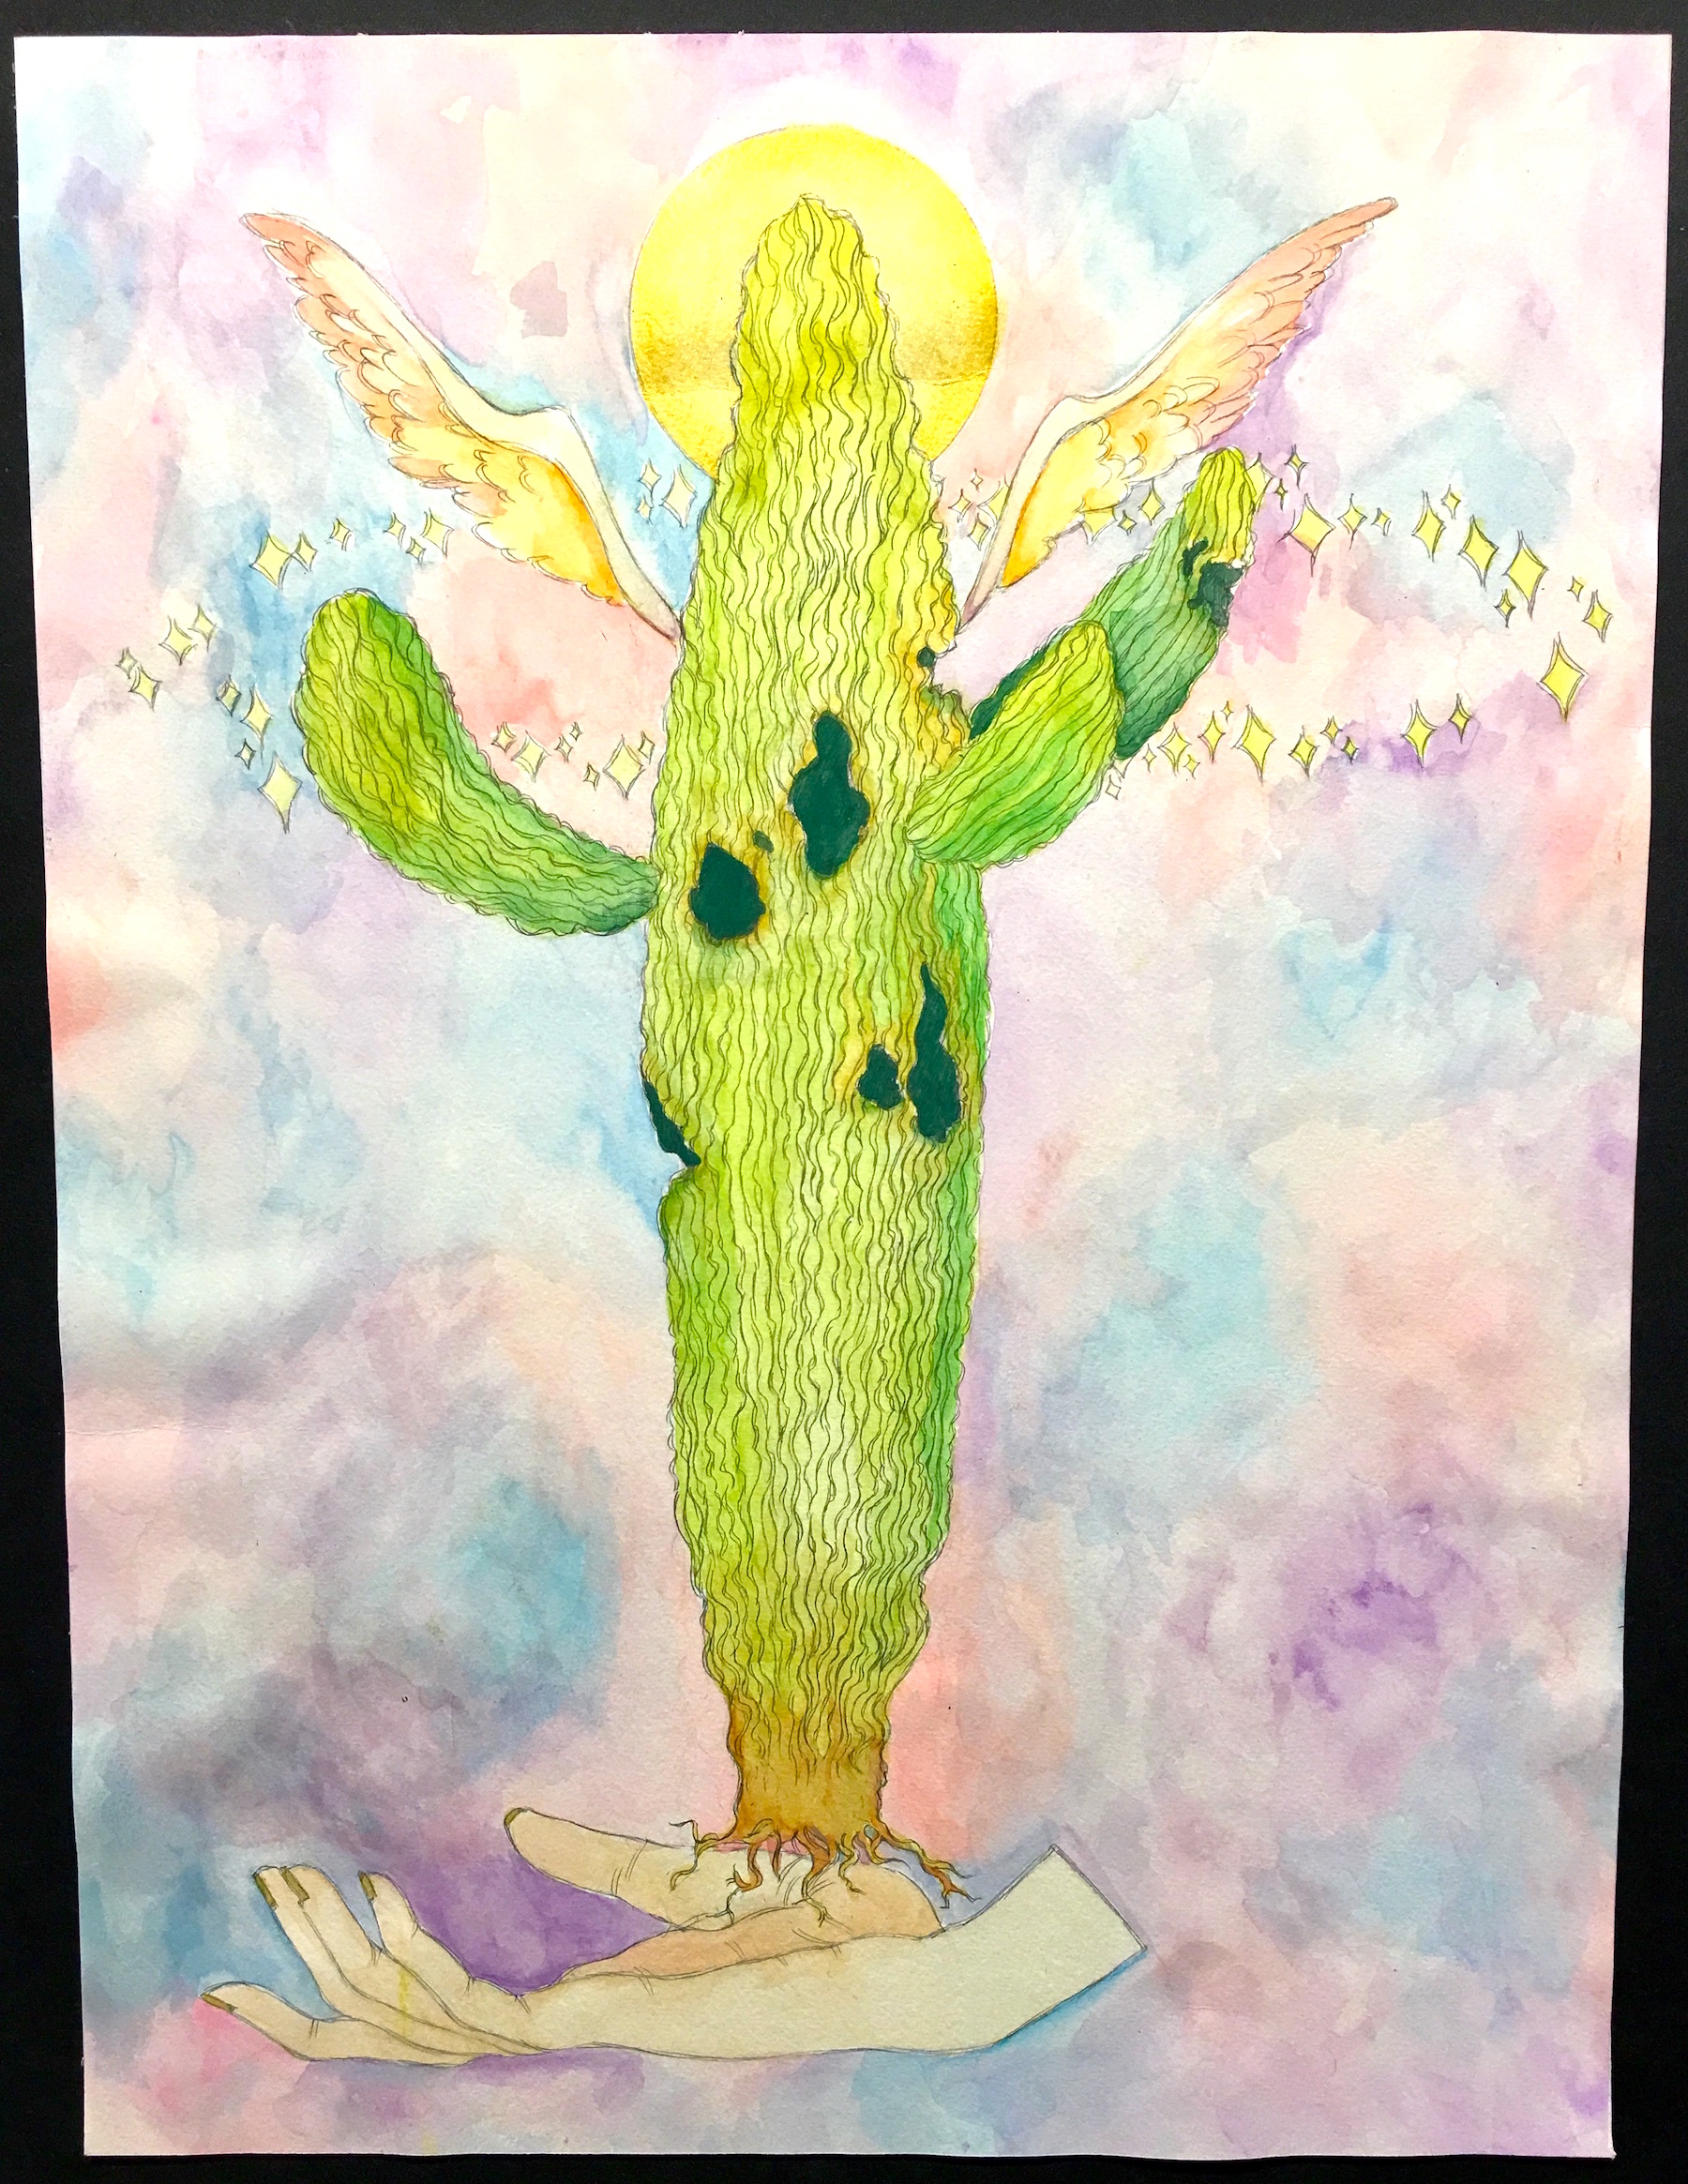 Tucson High Magnet School art